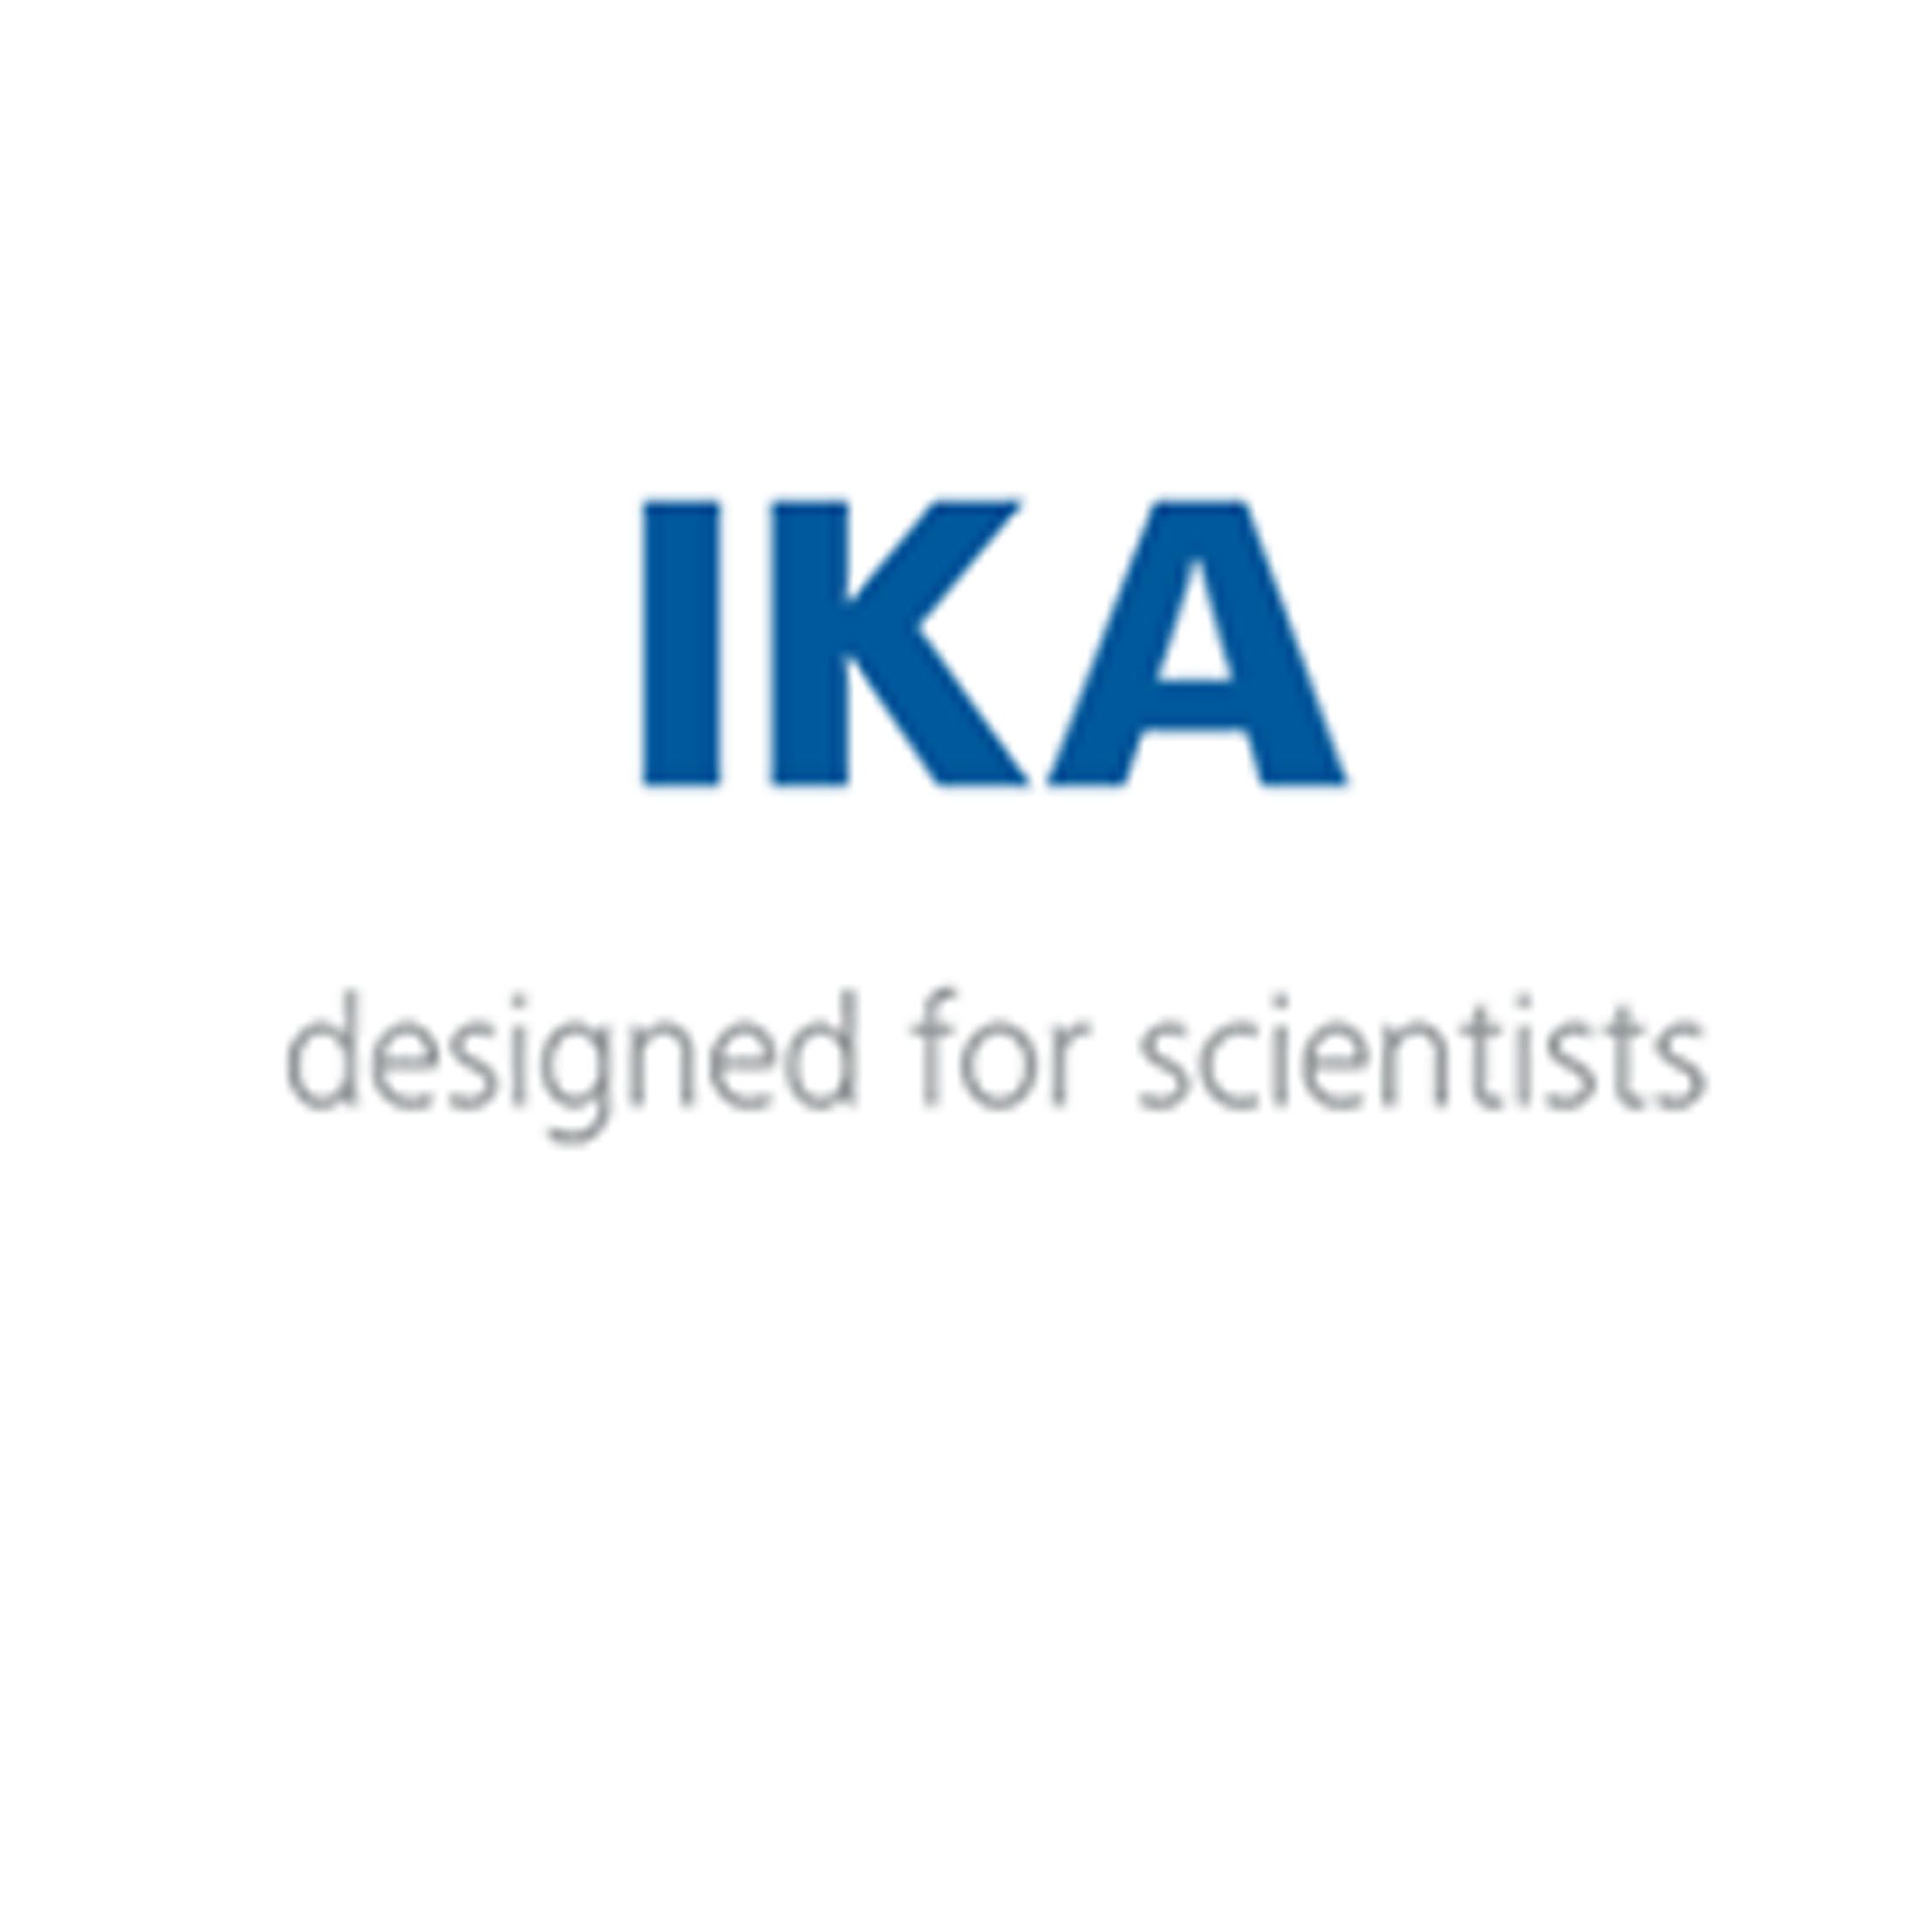 IKA磁力搅拌器、混合器、高架搅拌器、振动筛、均质器、磨机、旋转蒸发器、热量计、实验室反应器和专门开发的实验室和分析应用软件，现货